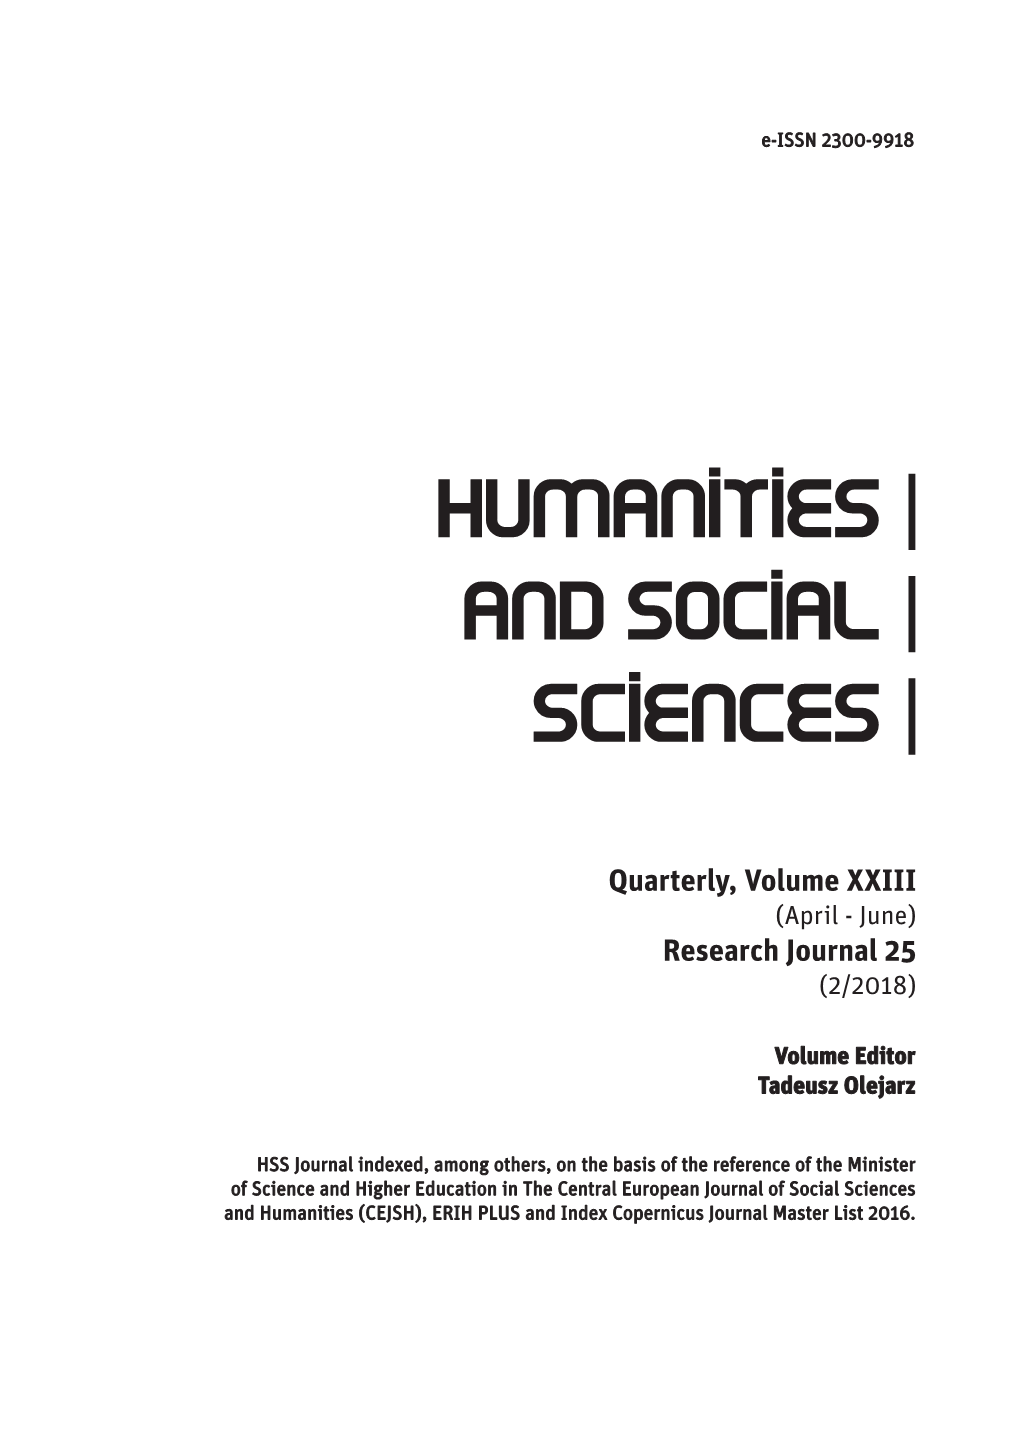 Quarterly, Volume XXIII Research Journal 25